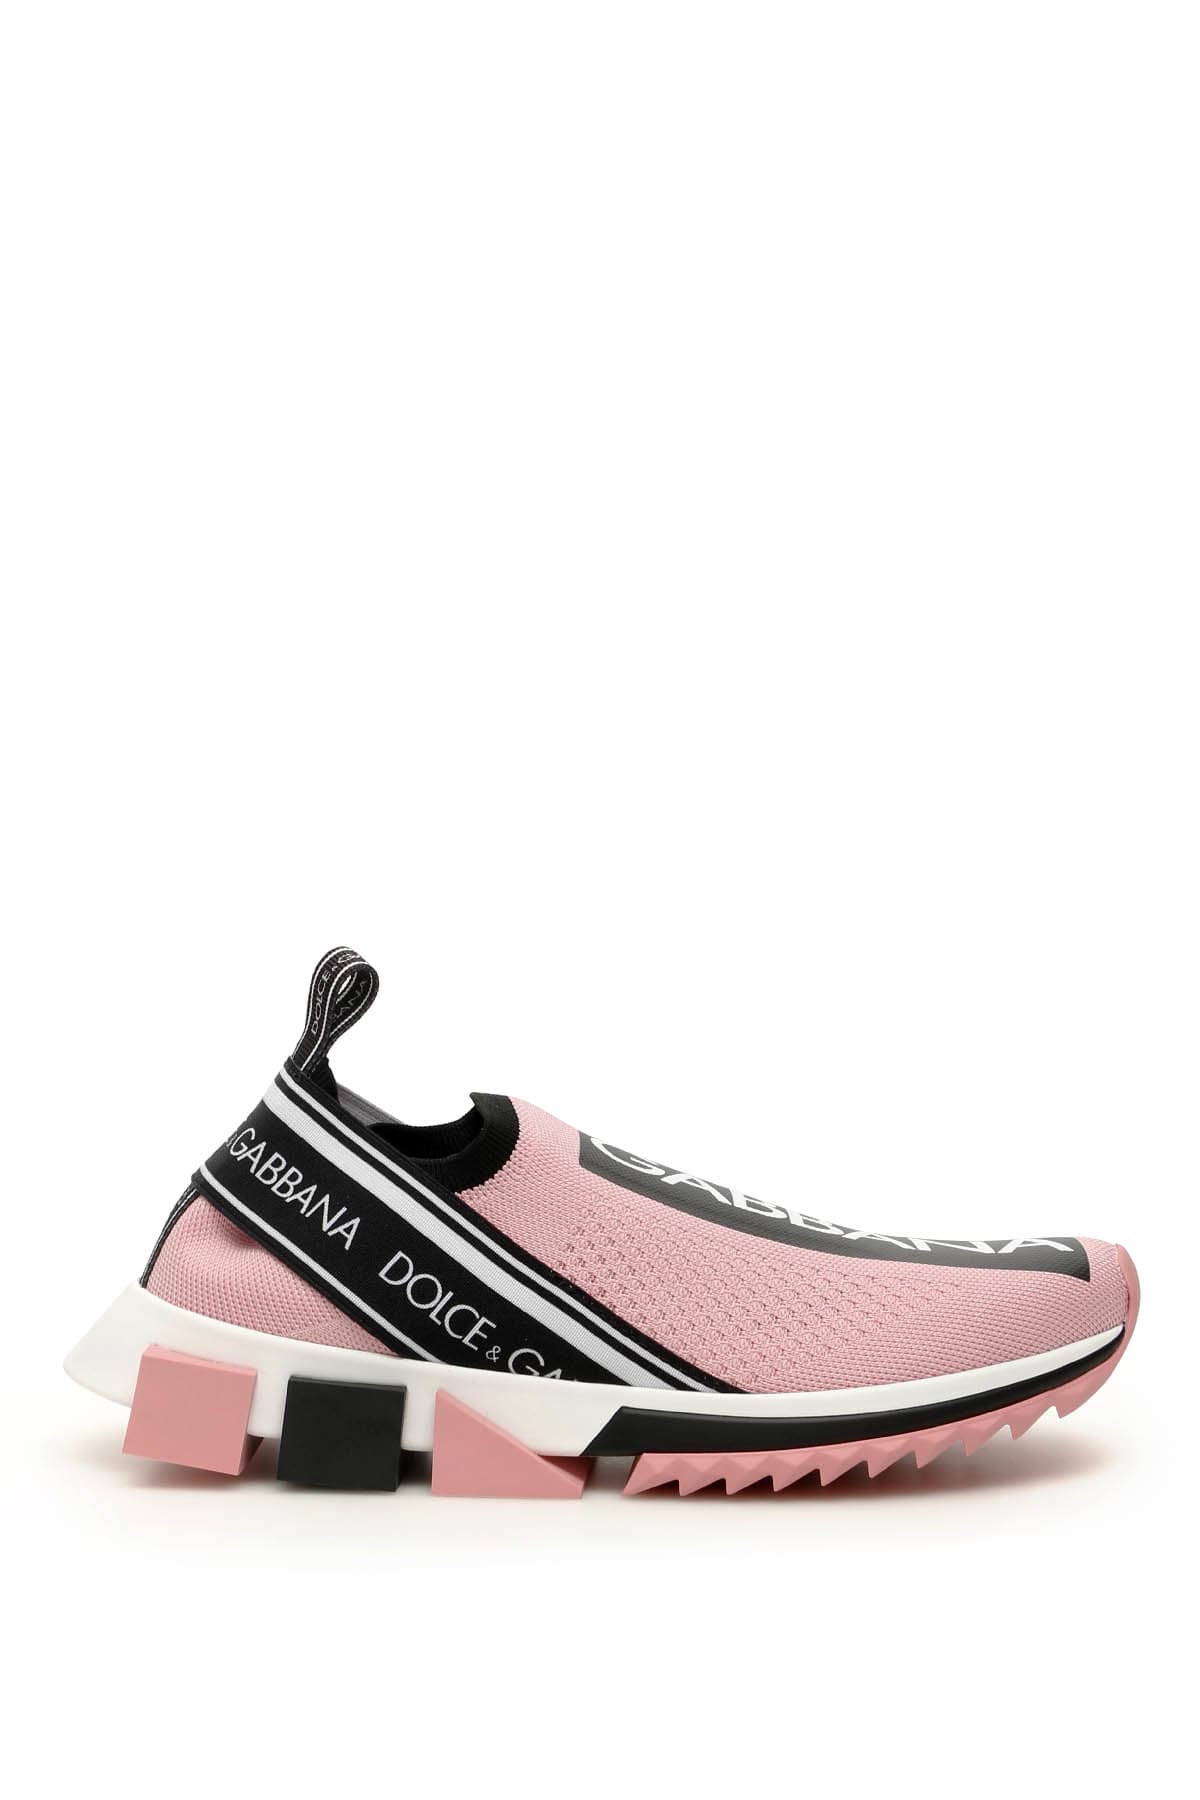 Dolce & Gabbana Running Knit Sneakers